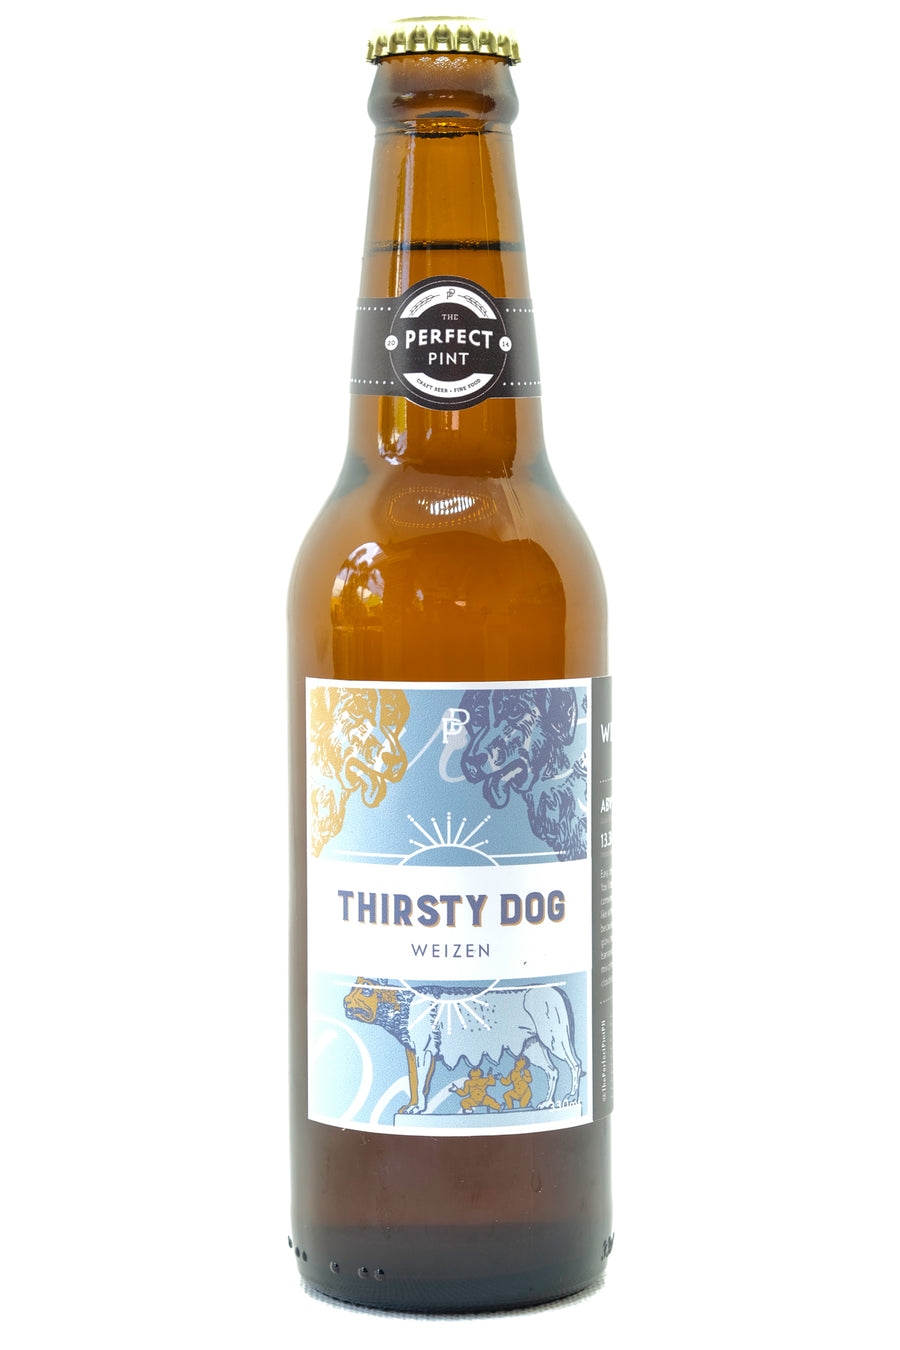 Thirsty Dog Weizen (ABV 5.7%, 13.3 IBU)